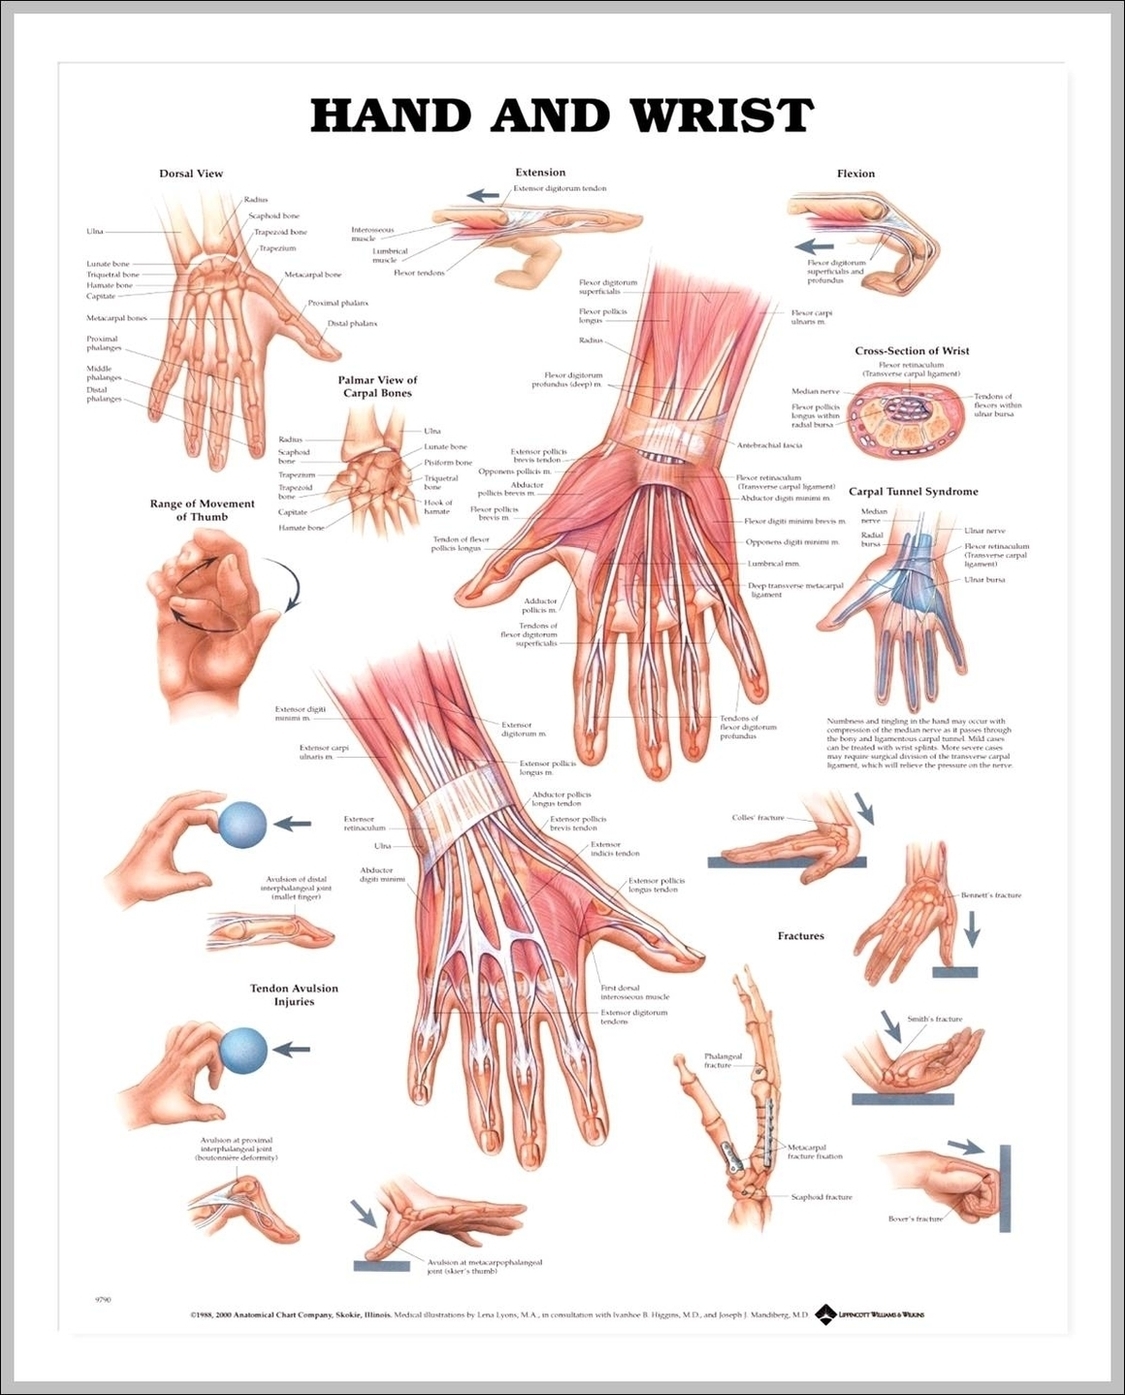 Wrist And Hand Anatomy Image